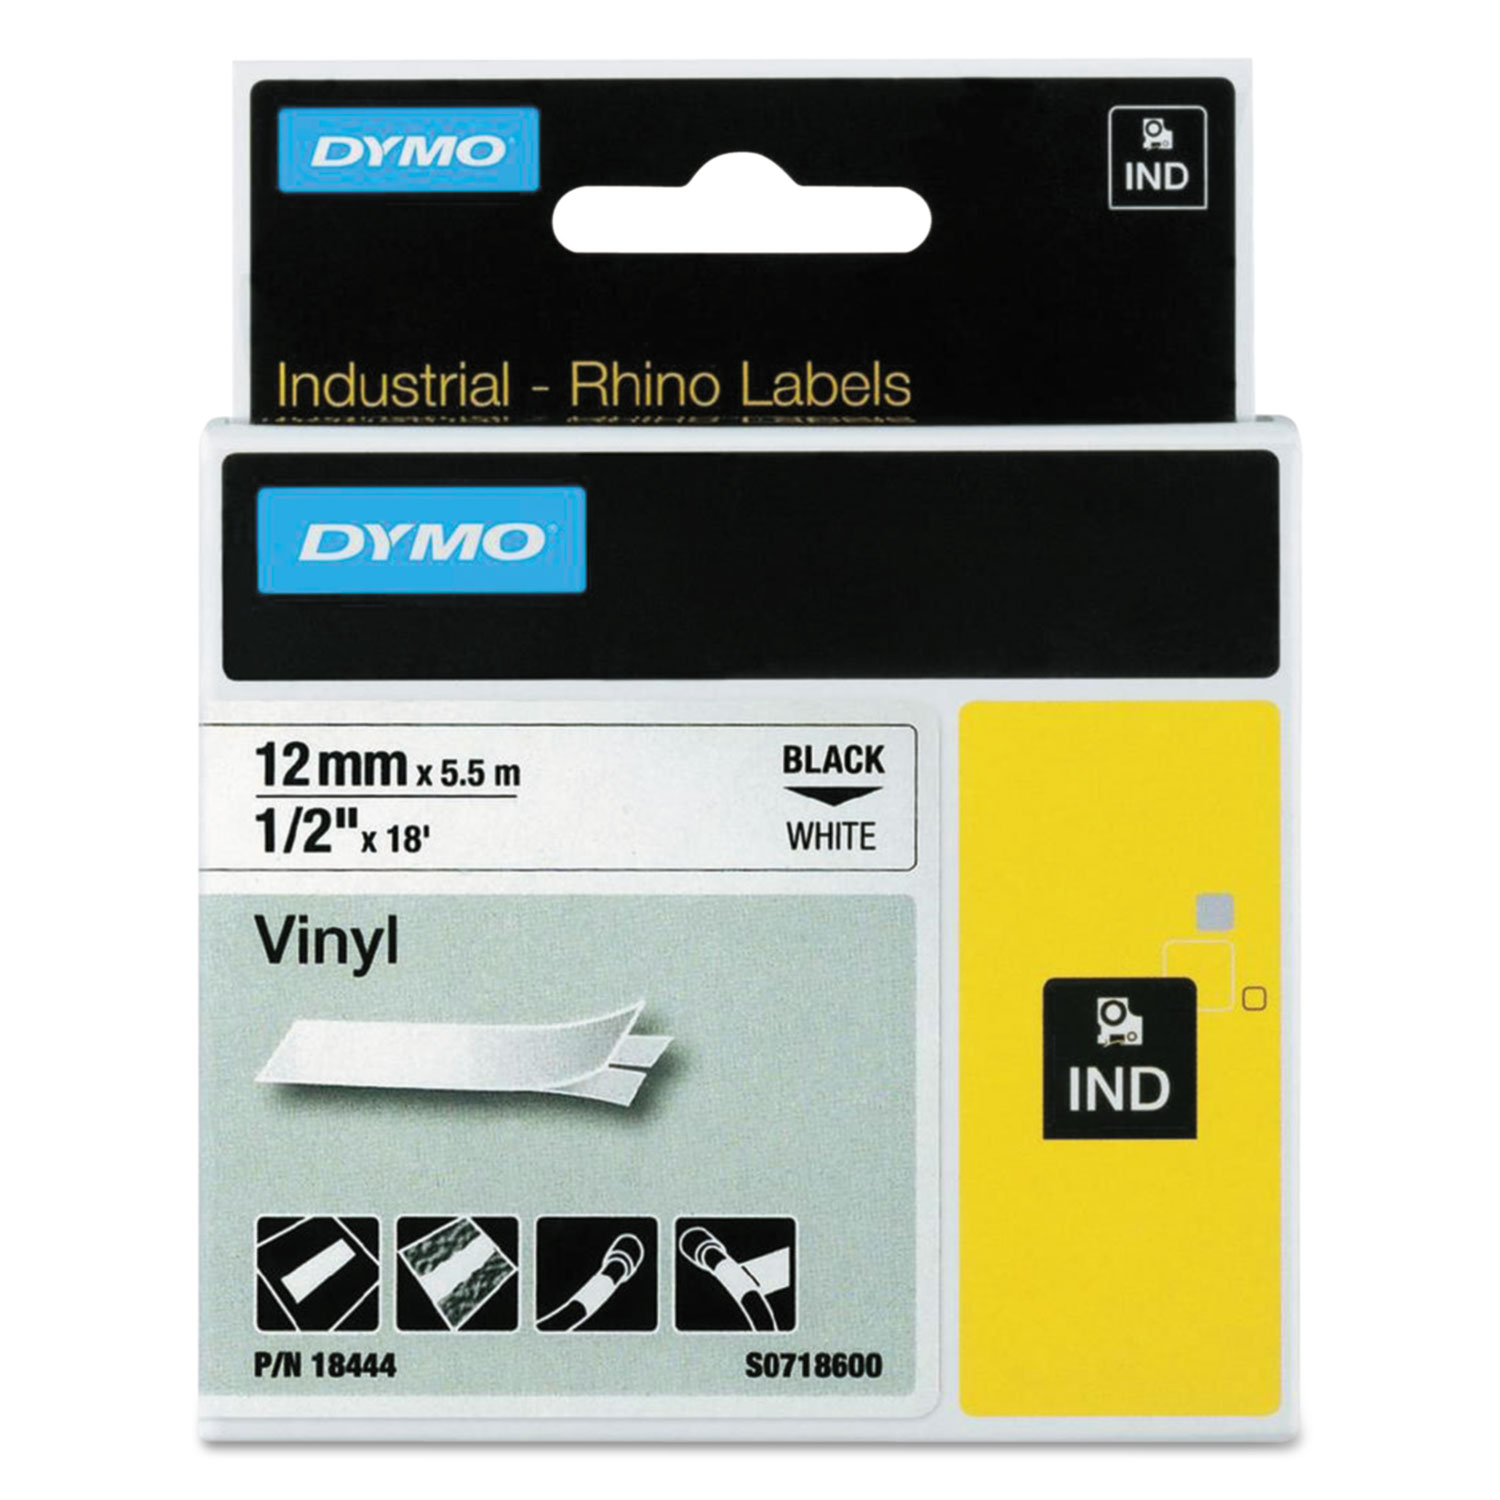  DYMO 18444 Rhino Permanent Vinyl Industrial Label Tape, 0.5 x 18 ft, White/Black Print (DYM18444) 